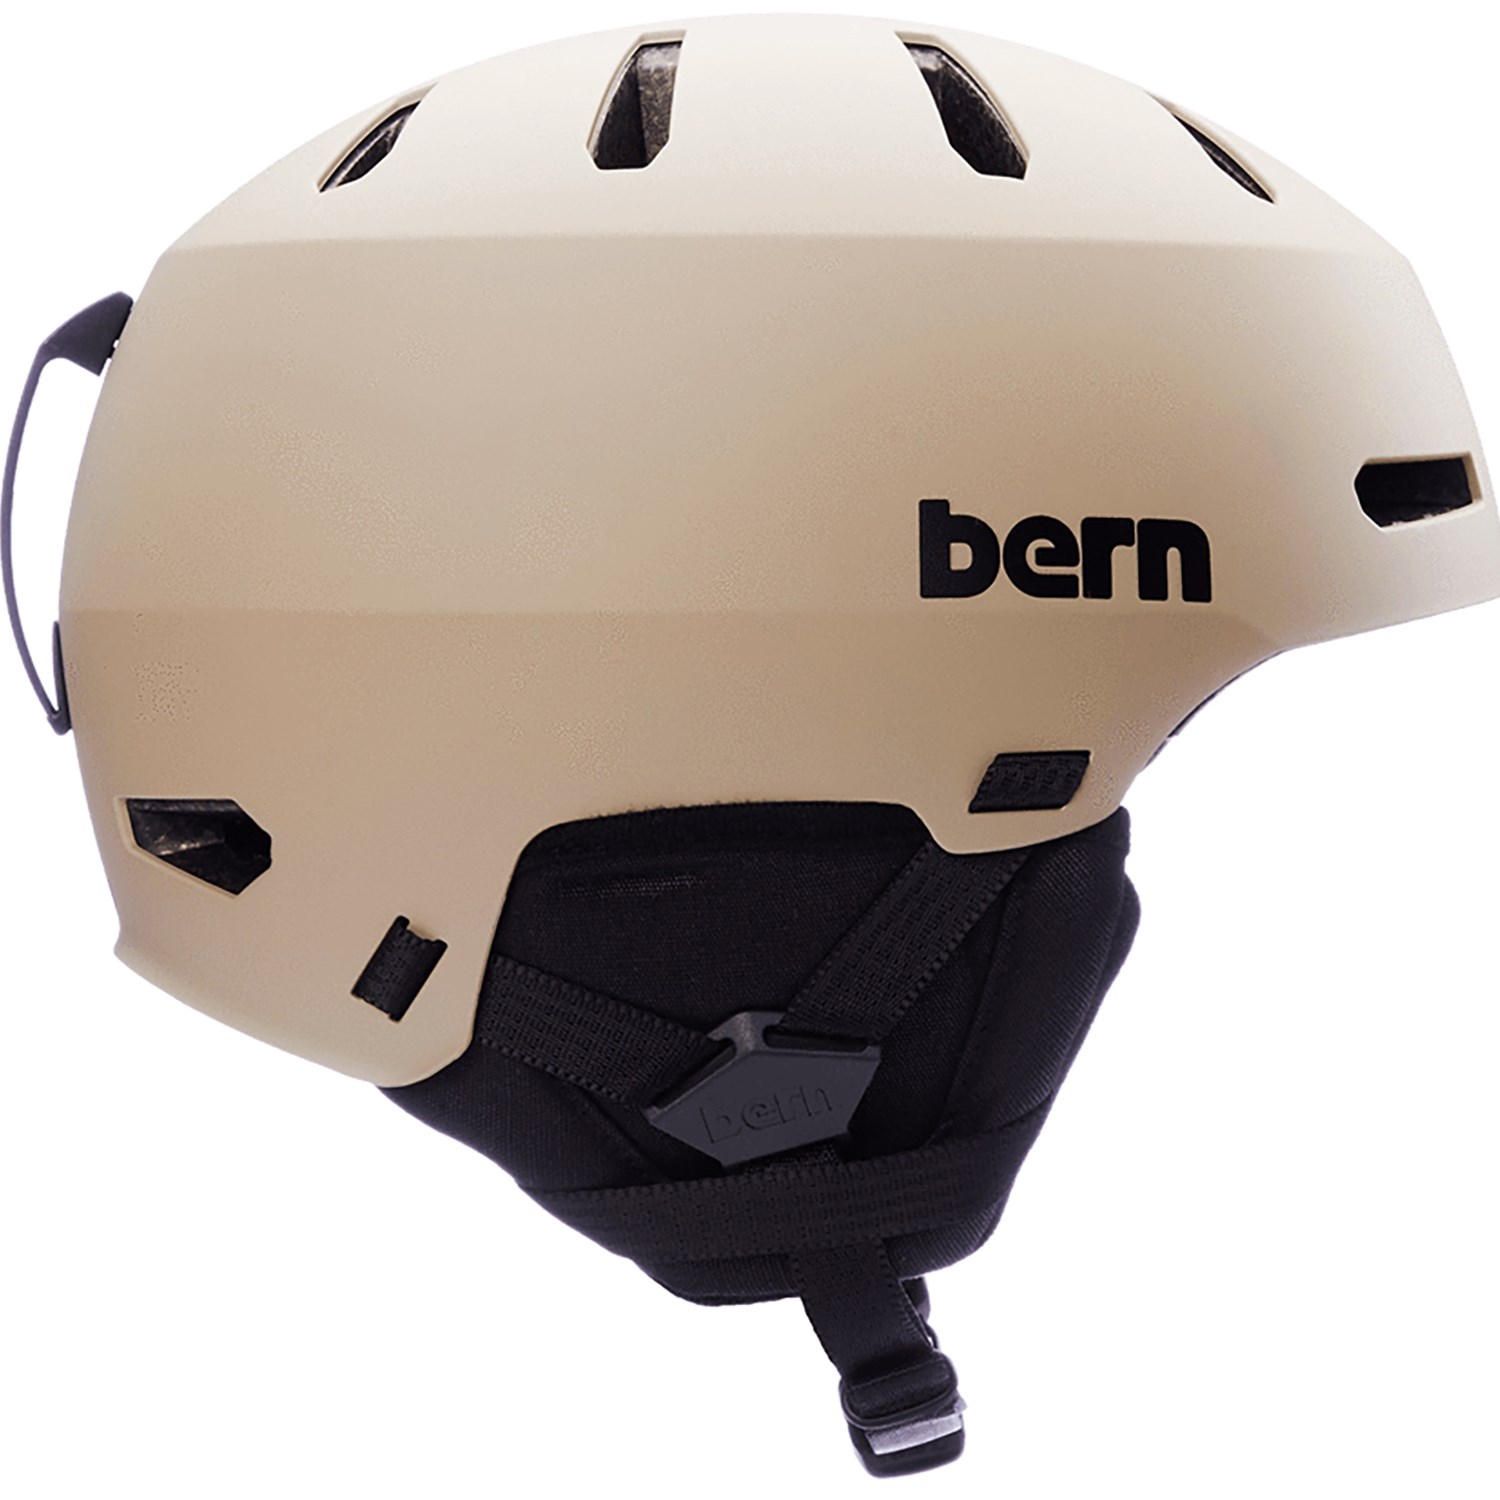 Bern Macon 2.0 MIPS Helmet | evo